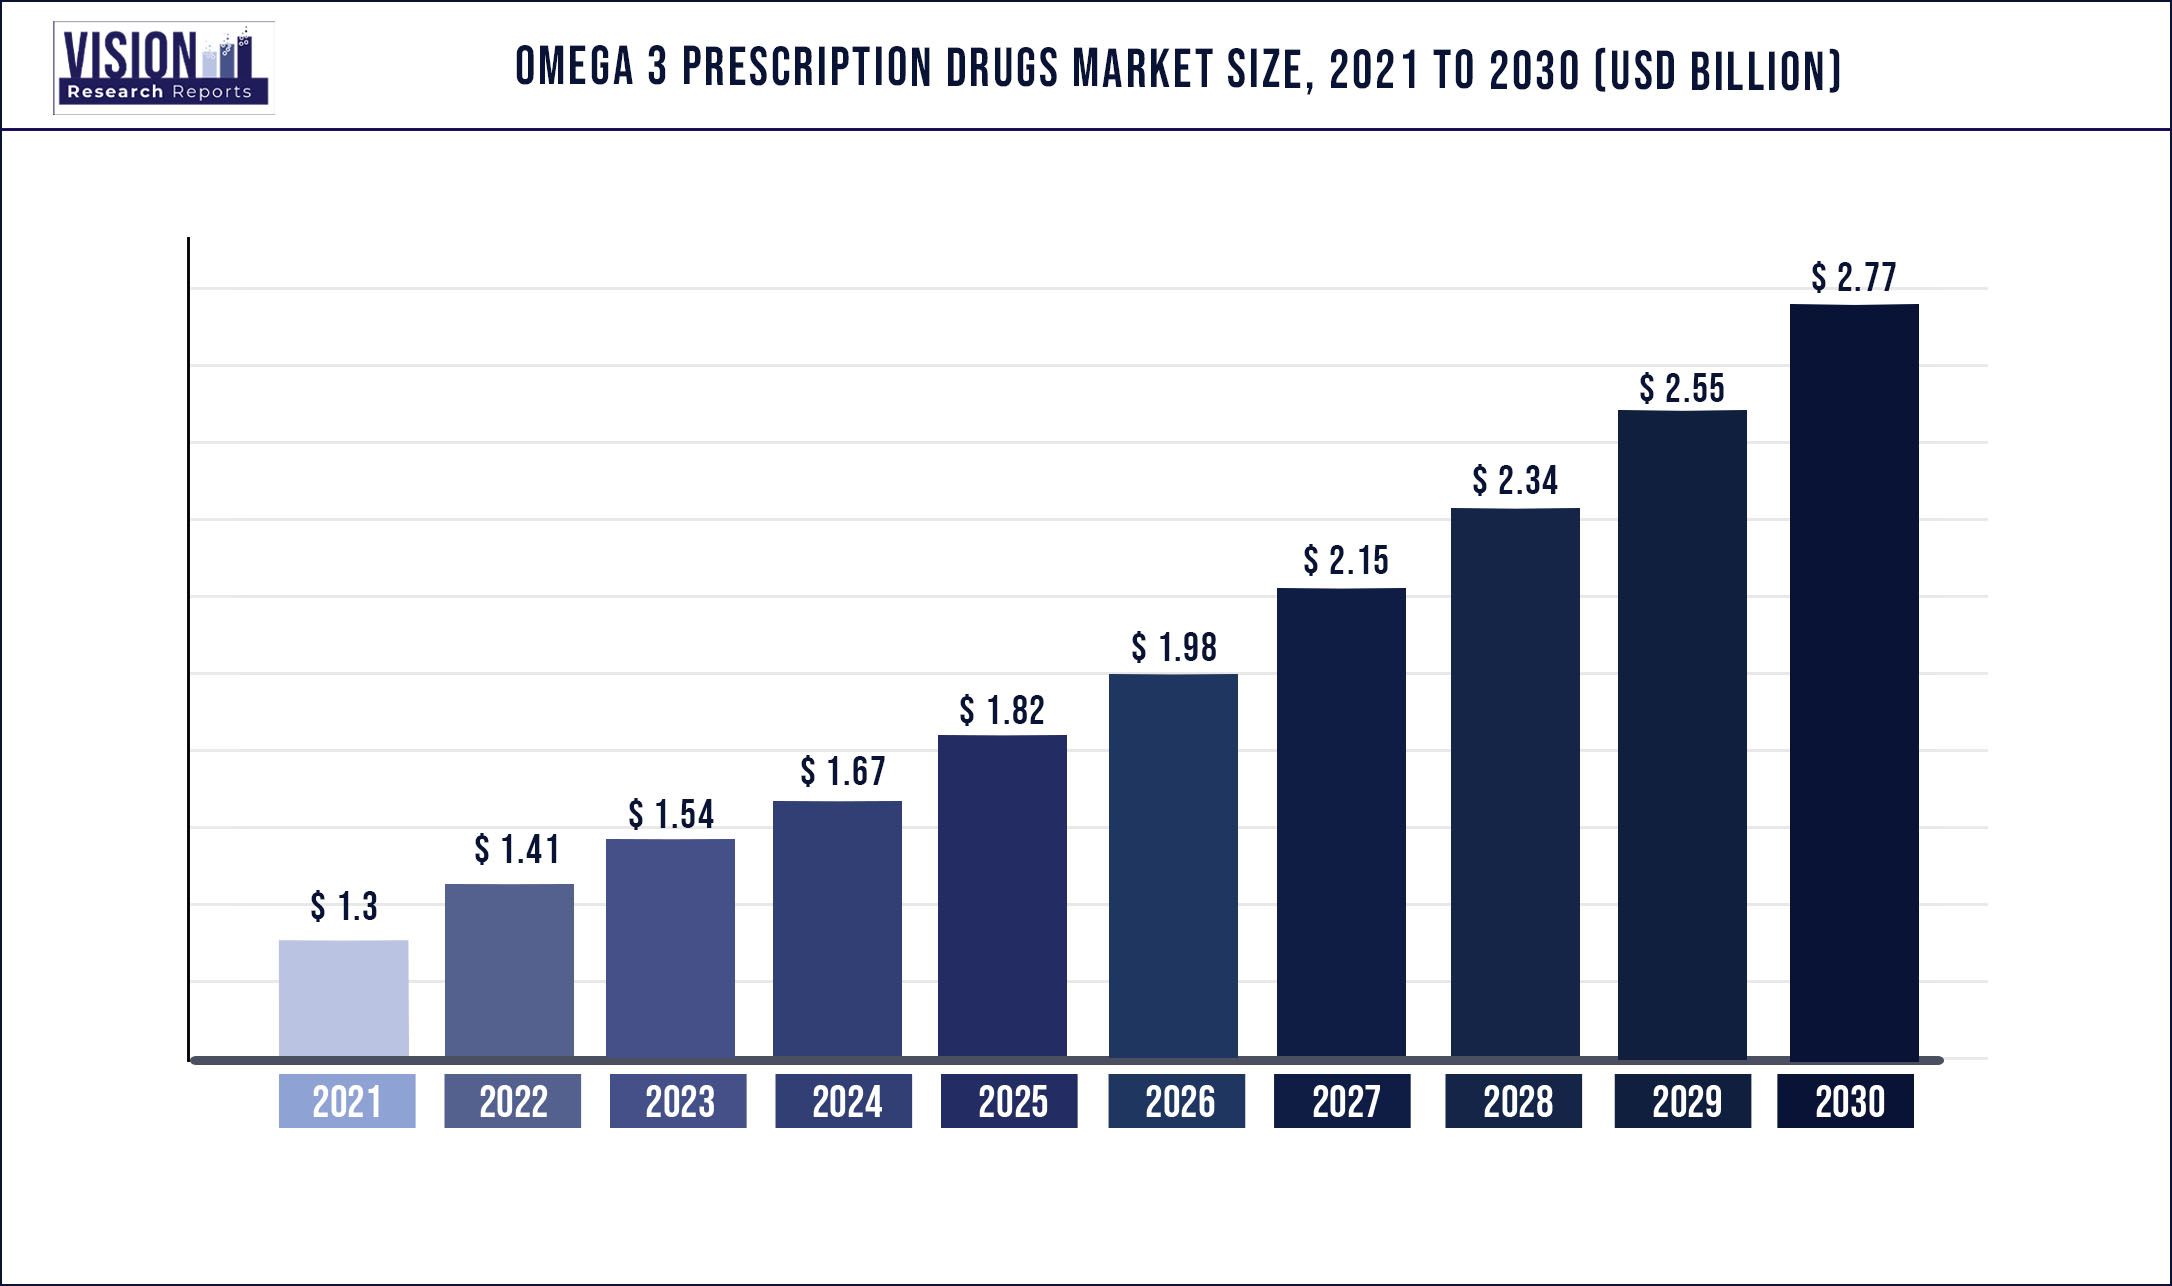 Omega-3 Prescription Drugs Market Size 2021 to 2030